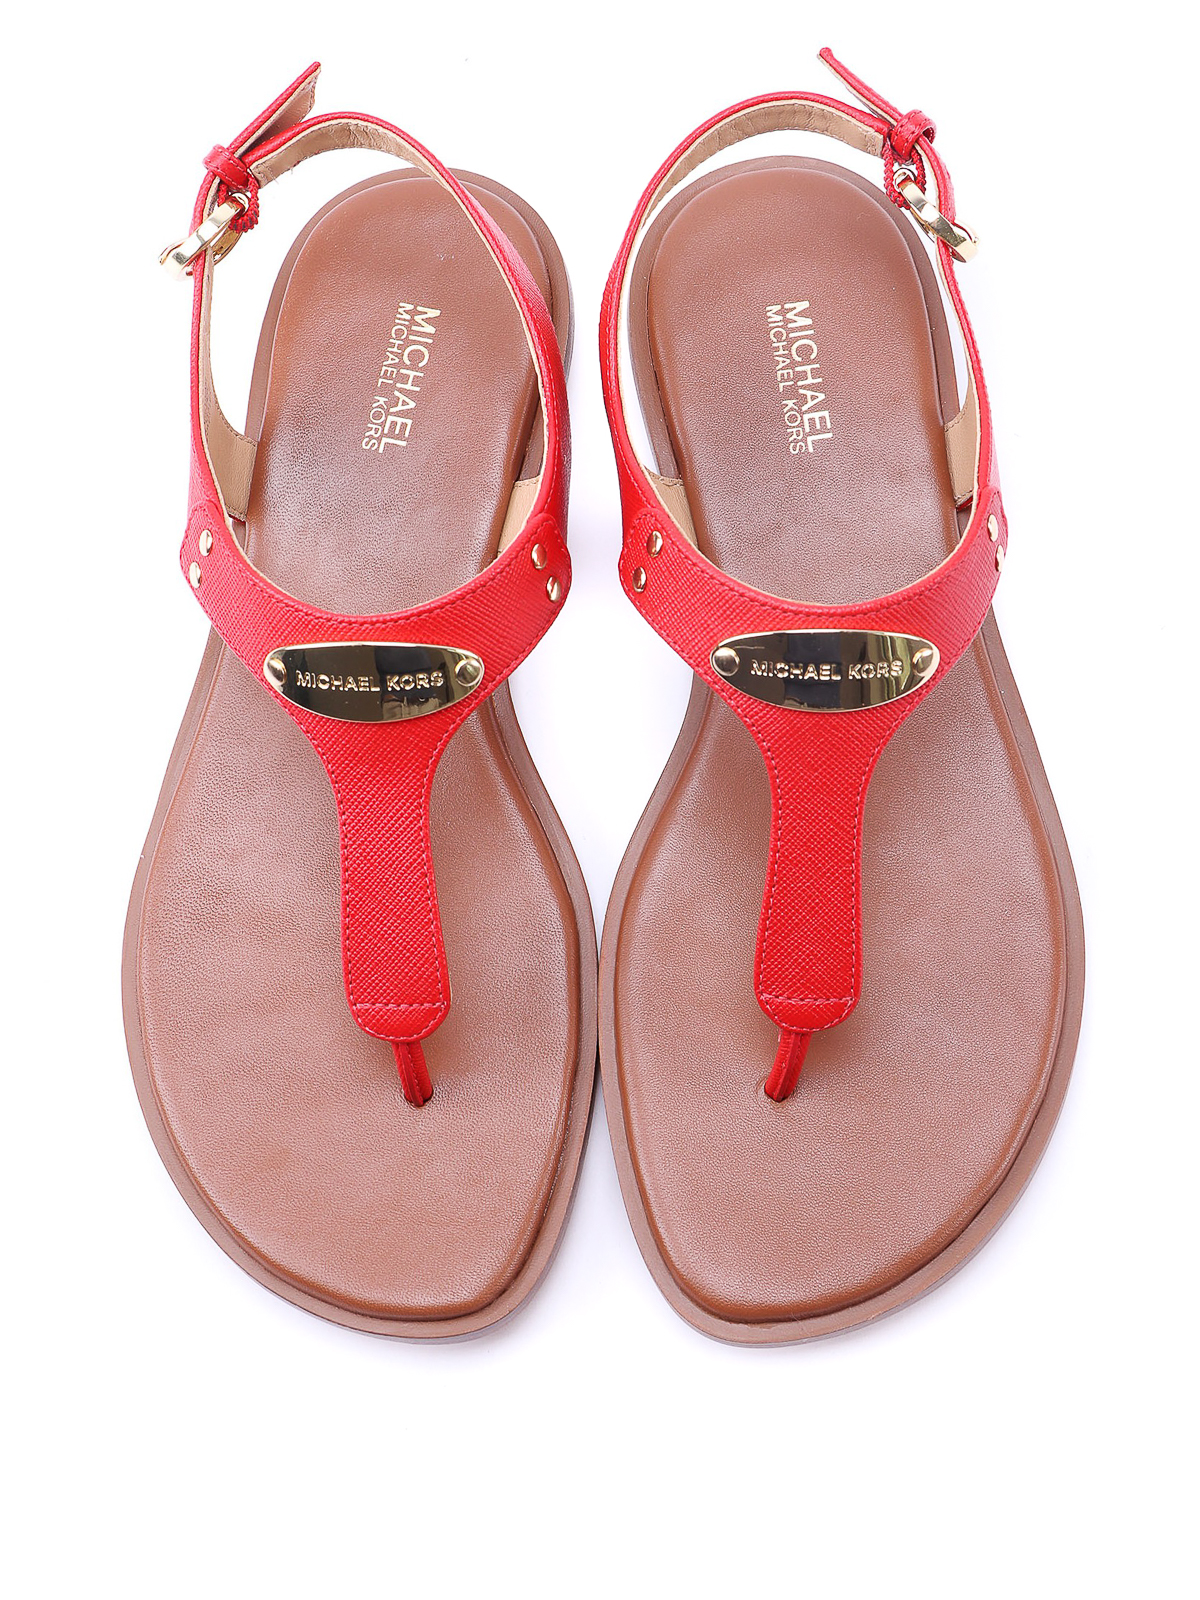 Sandals Michael Kors - Saffiano leather thong sandals - 40U2MKFA1L652